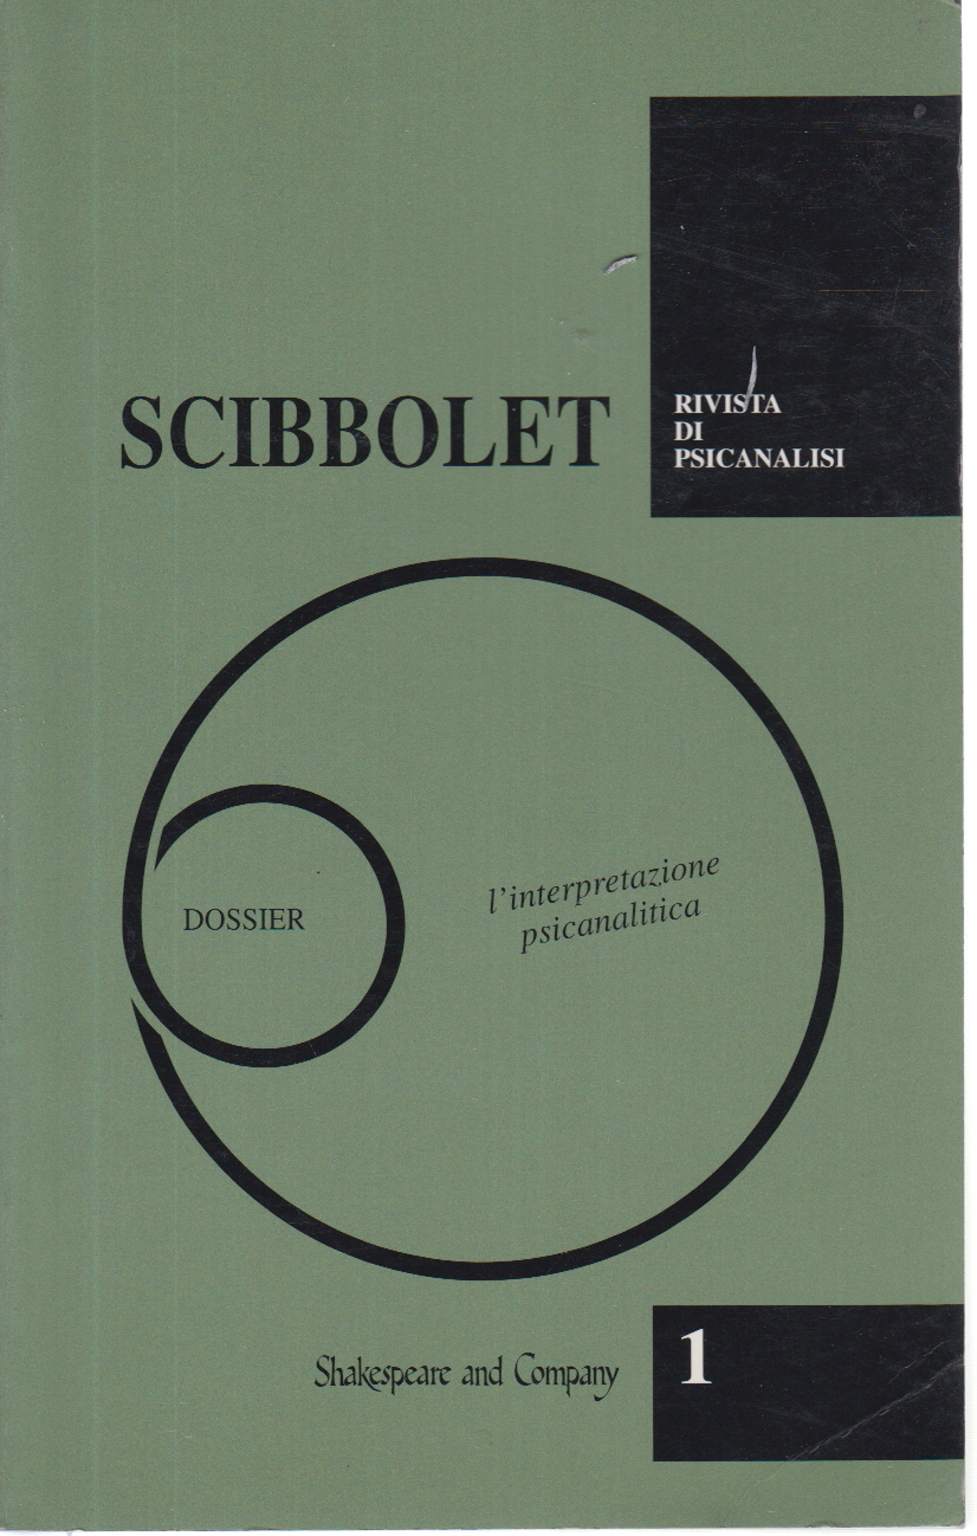 Scibbolet n. 1 1994, s.a.